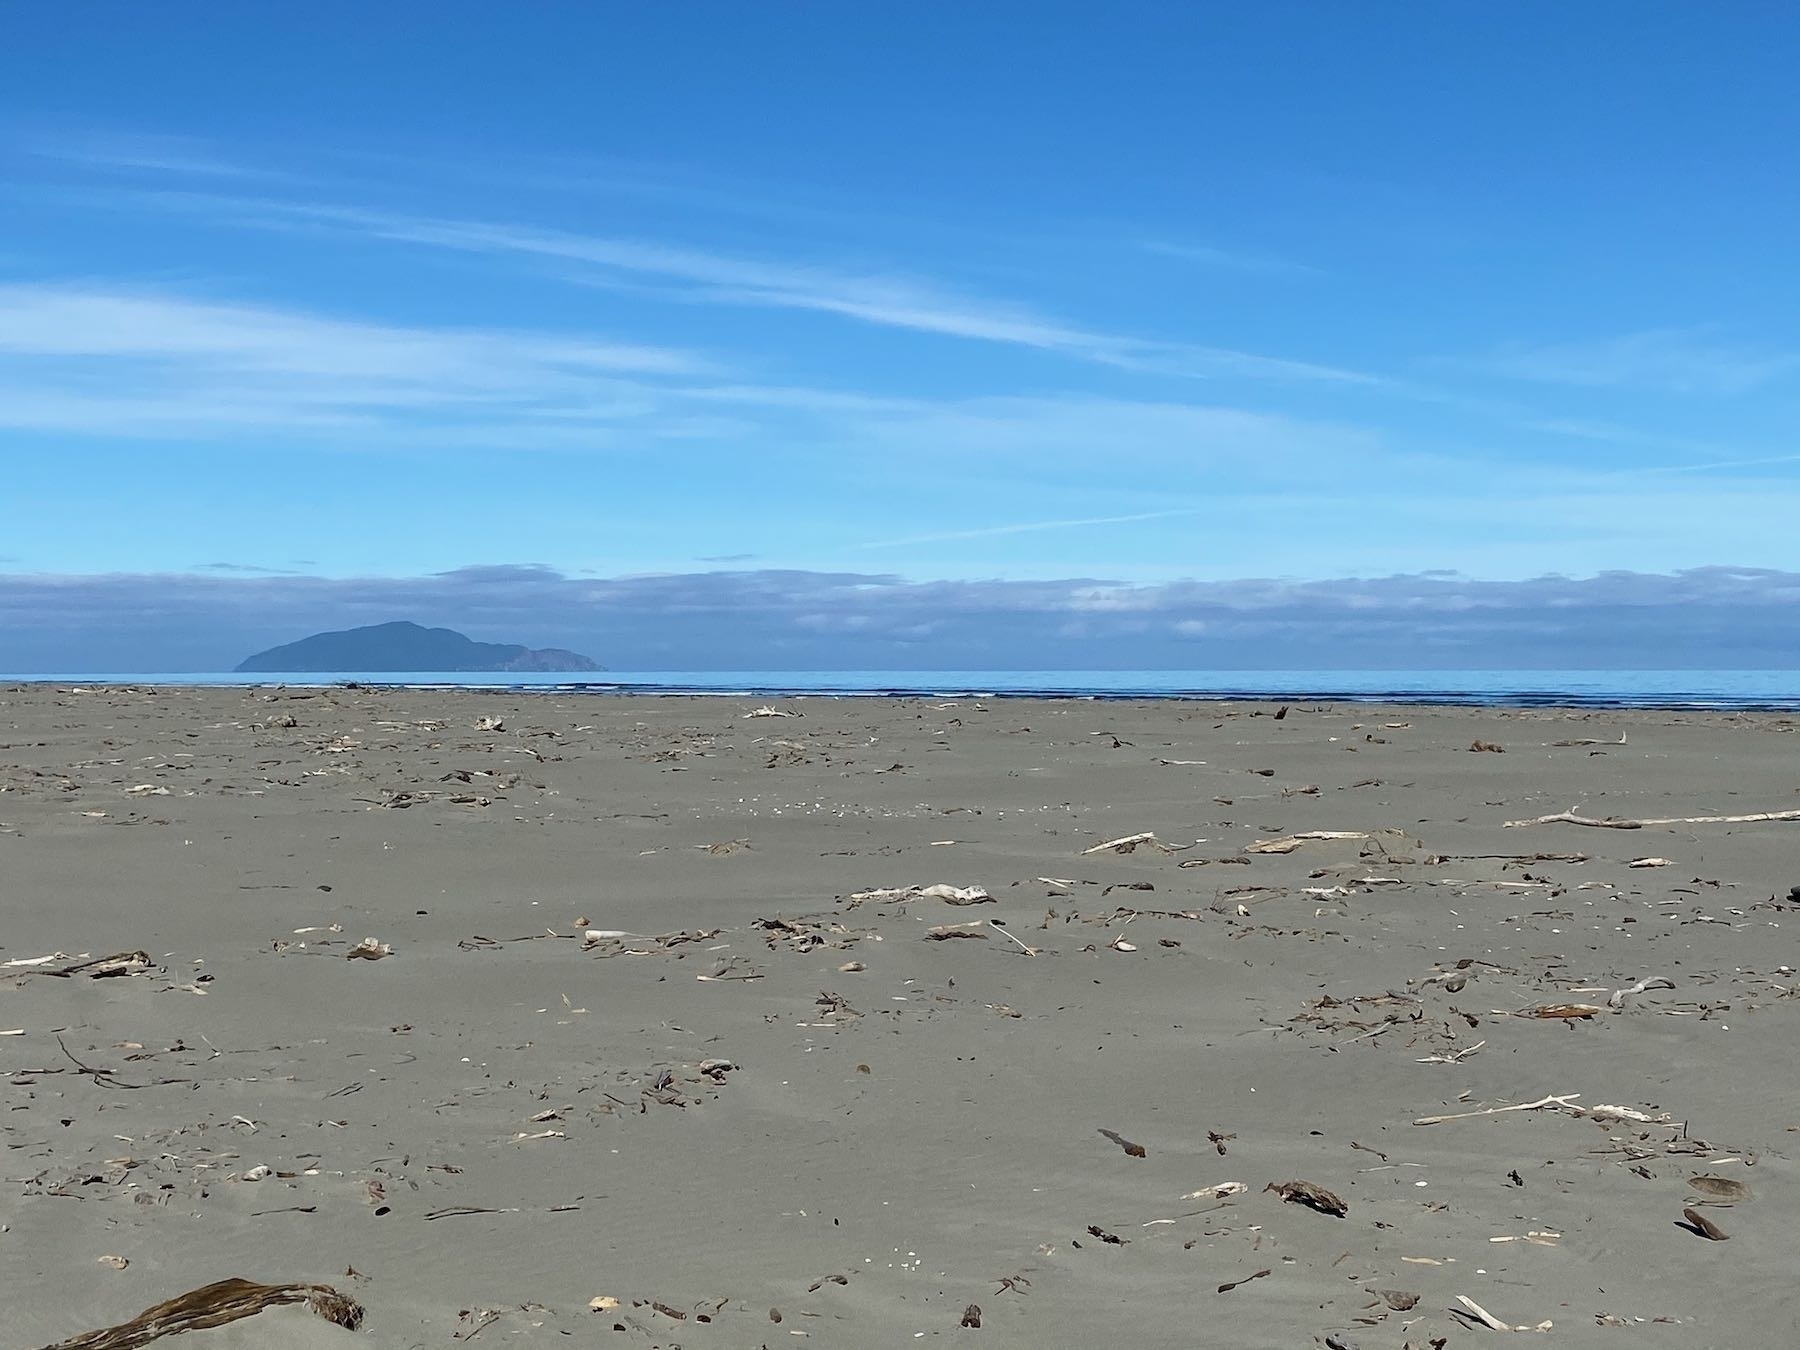 Sand, sea sky and Kāpiti Island.